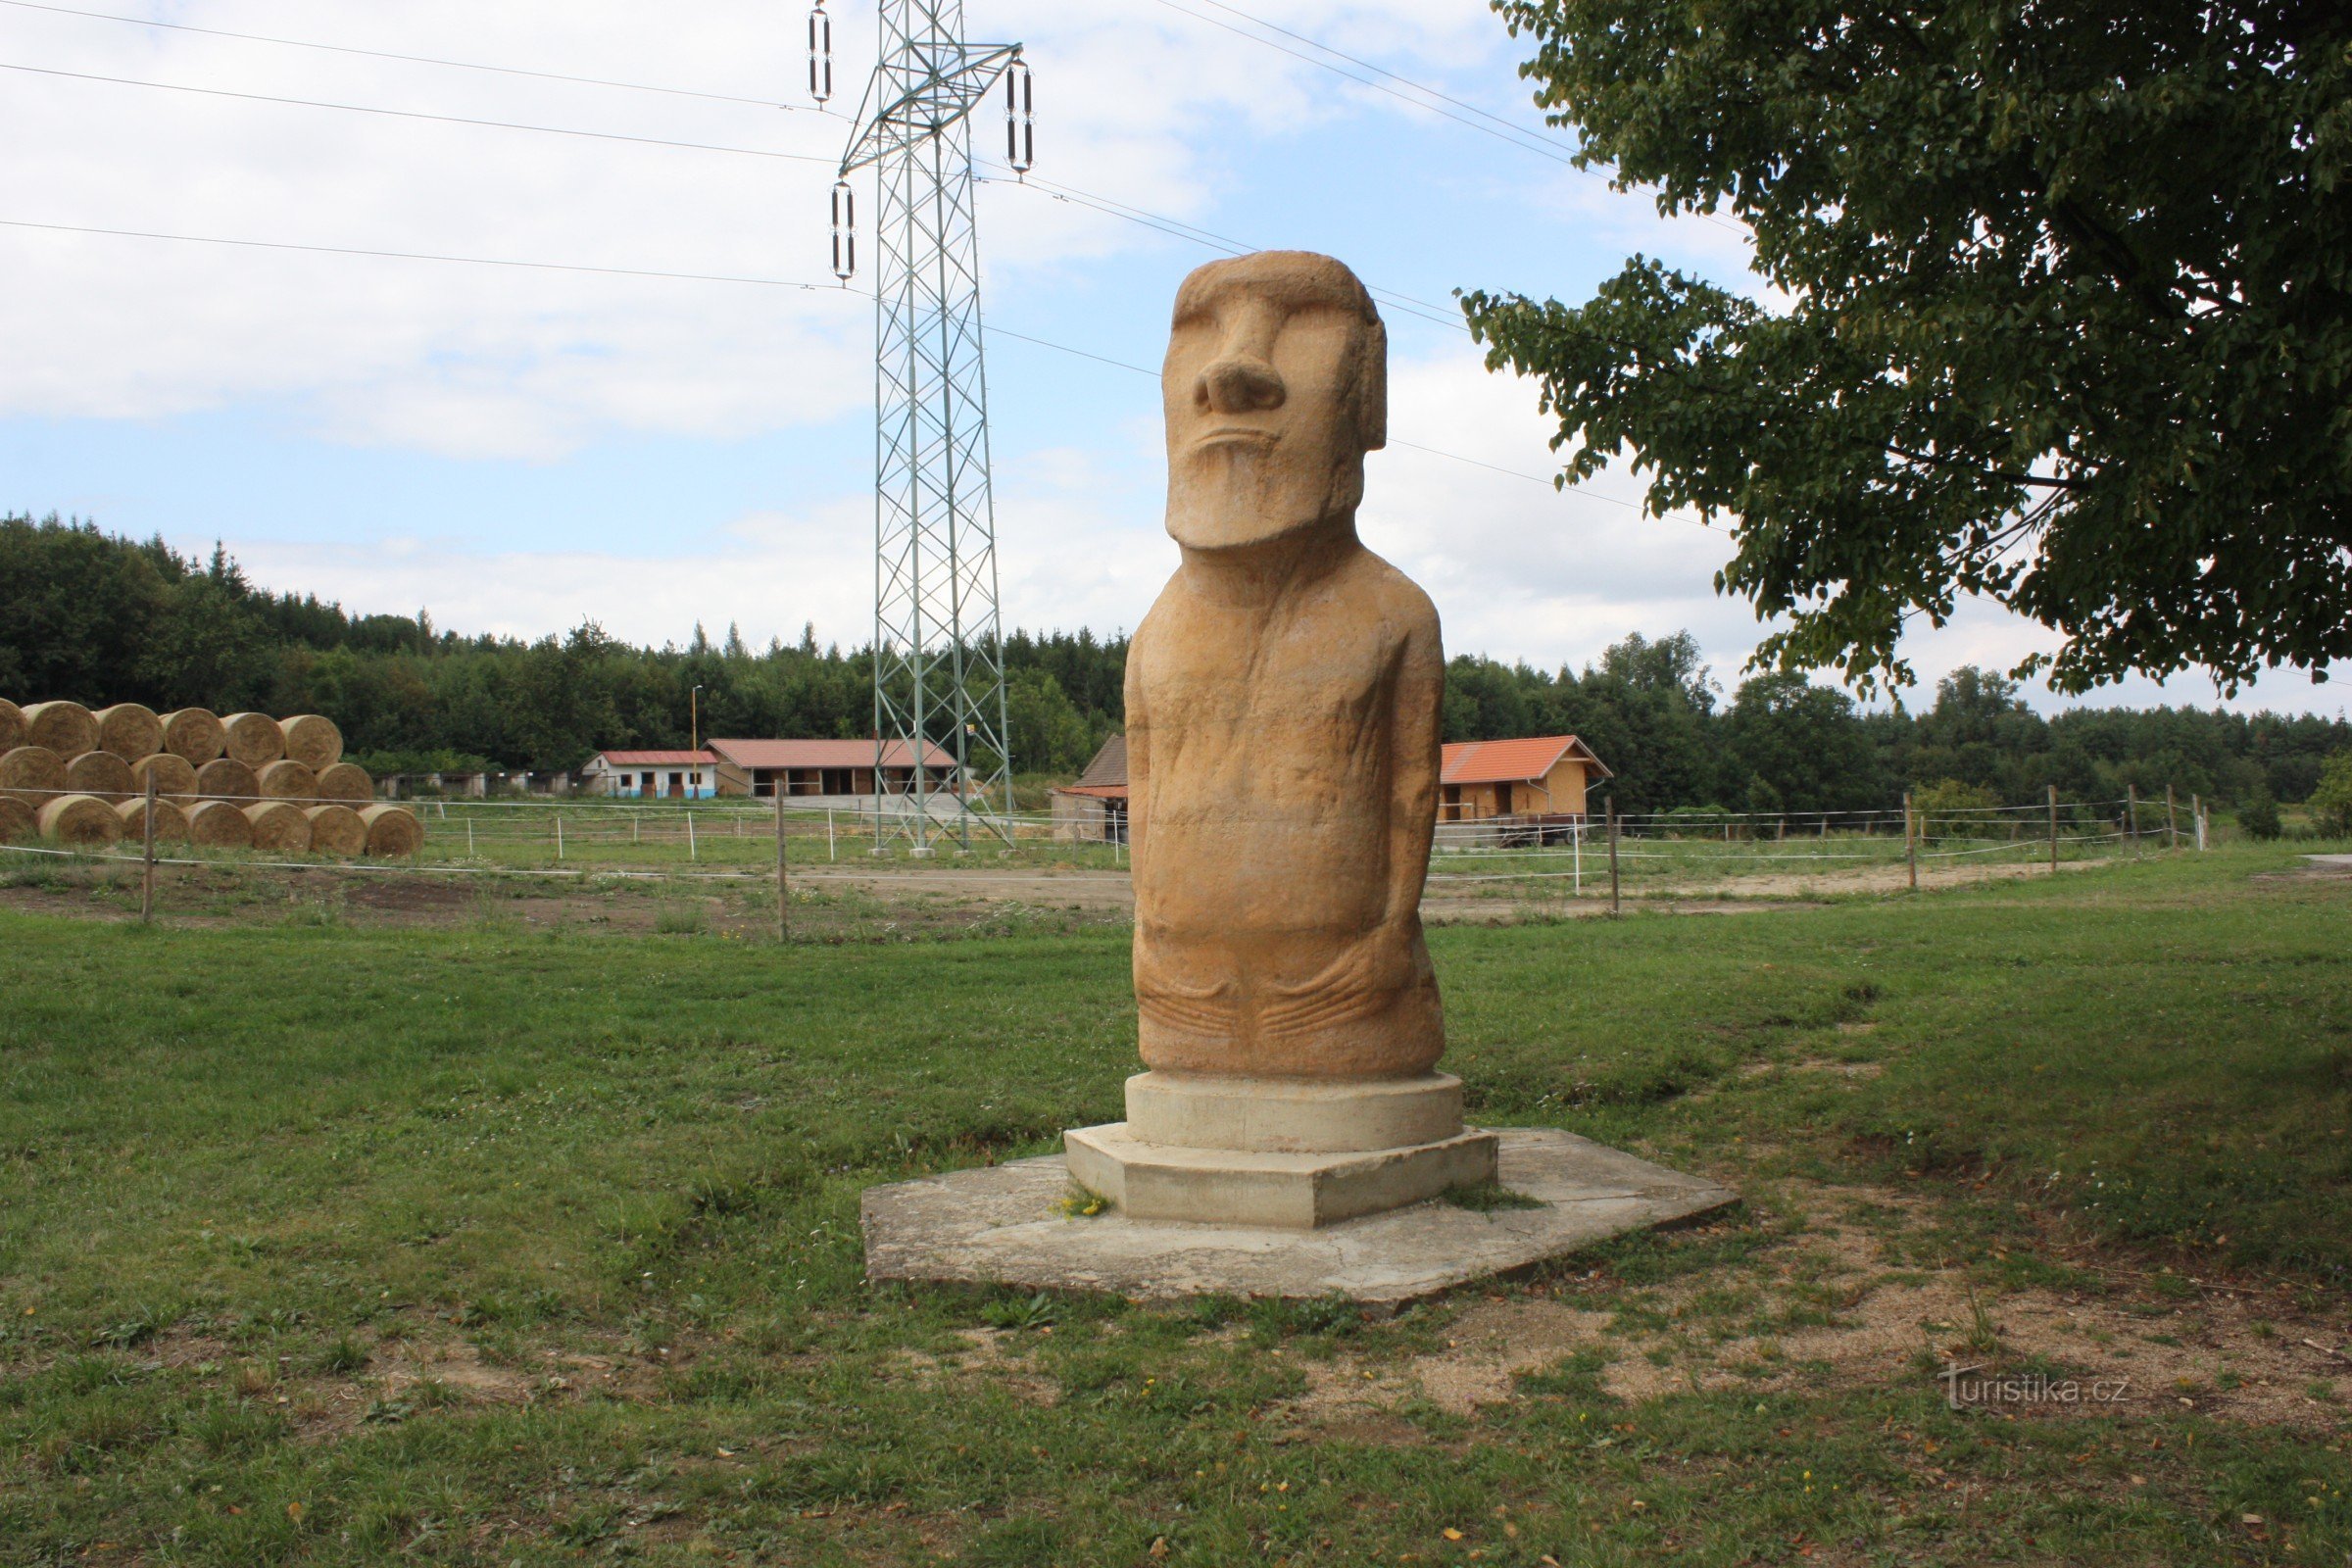 Replika sochy Moai v Bohdalicích u Bučovic